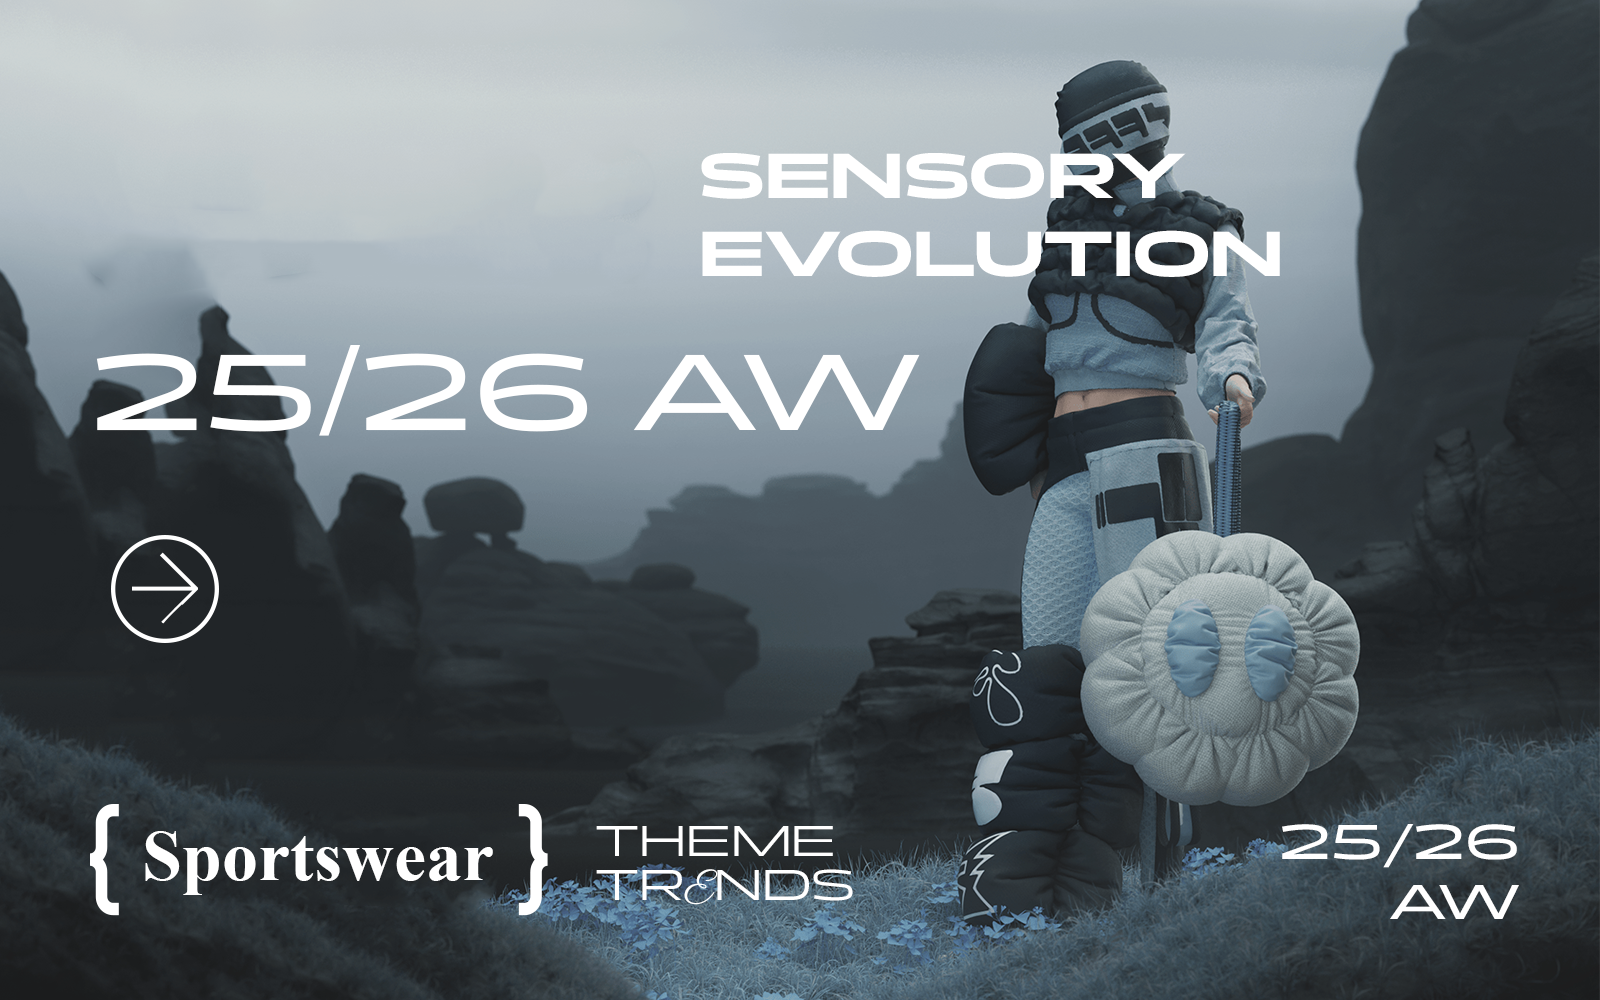 Sensory Evolution -- A/W 25/26 Thematic Trend for Sportswear